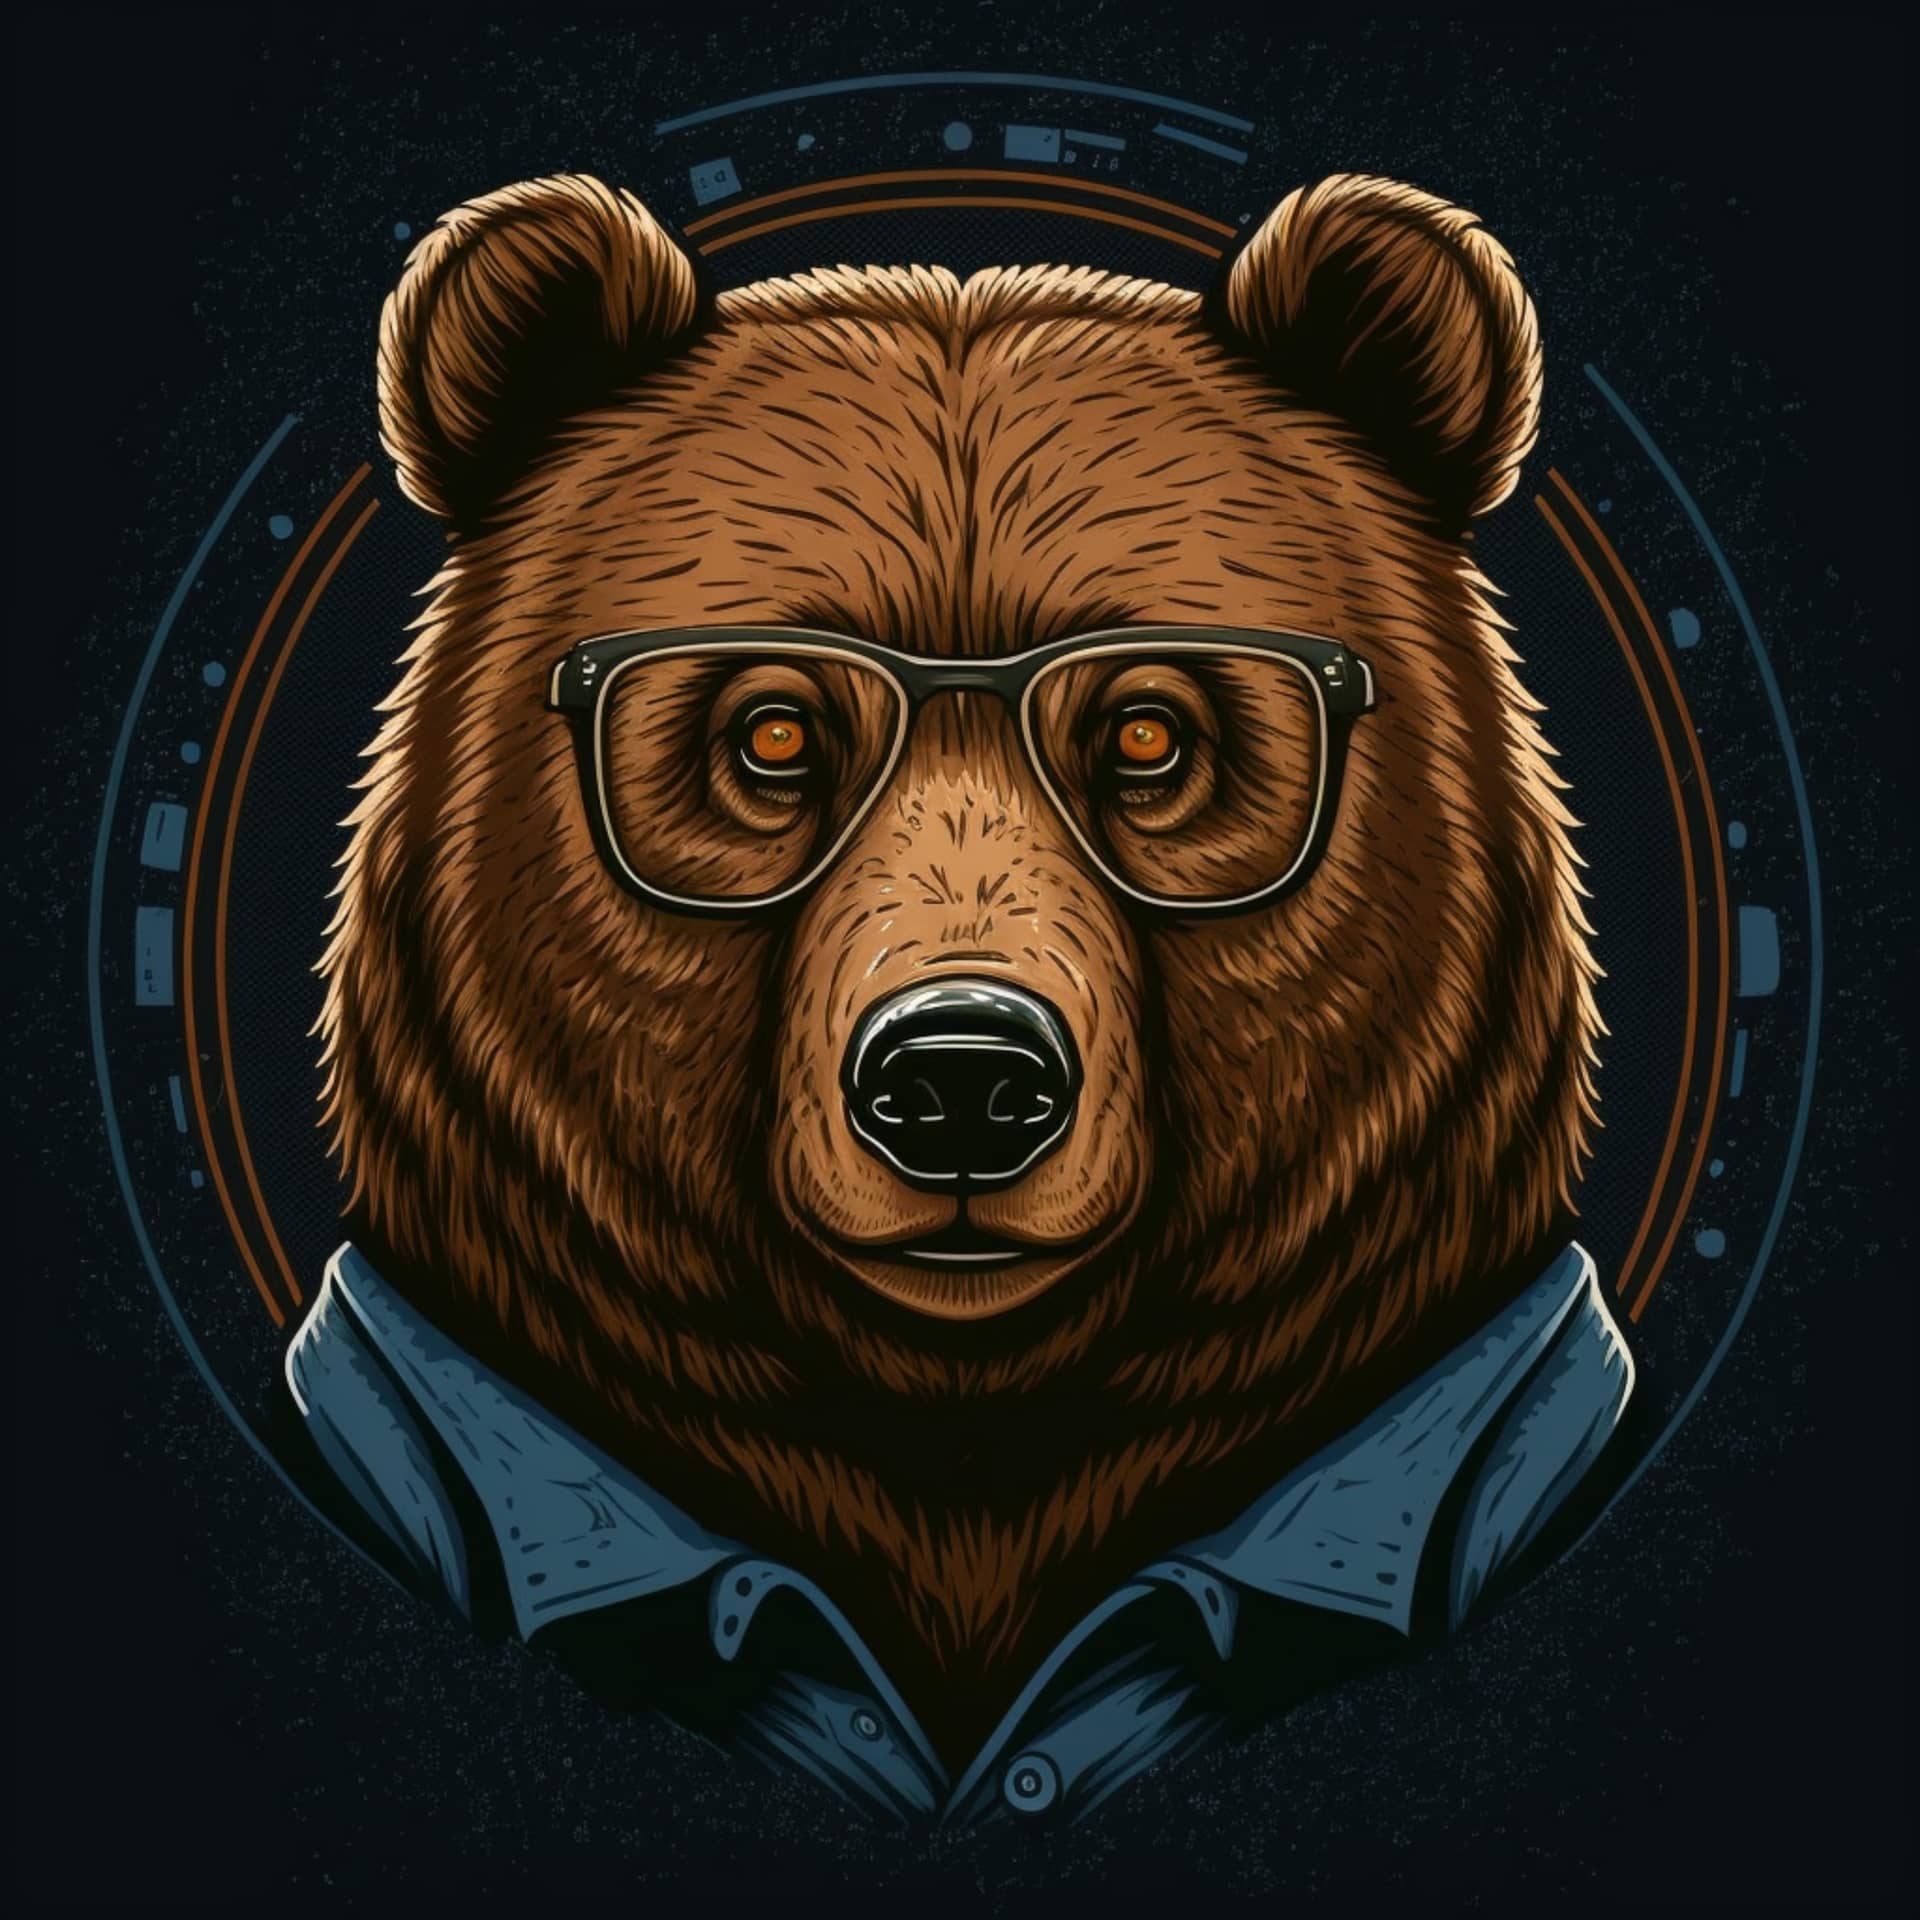 Cool bear illustration design nice image